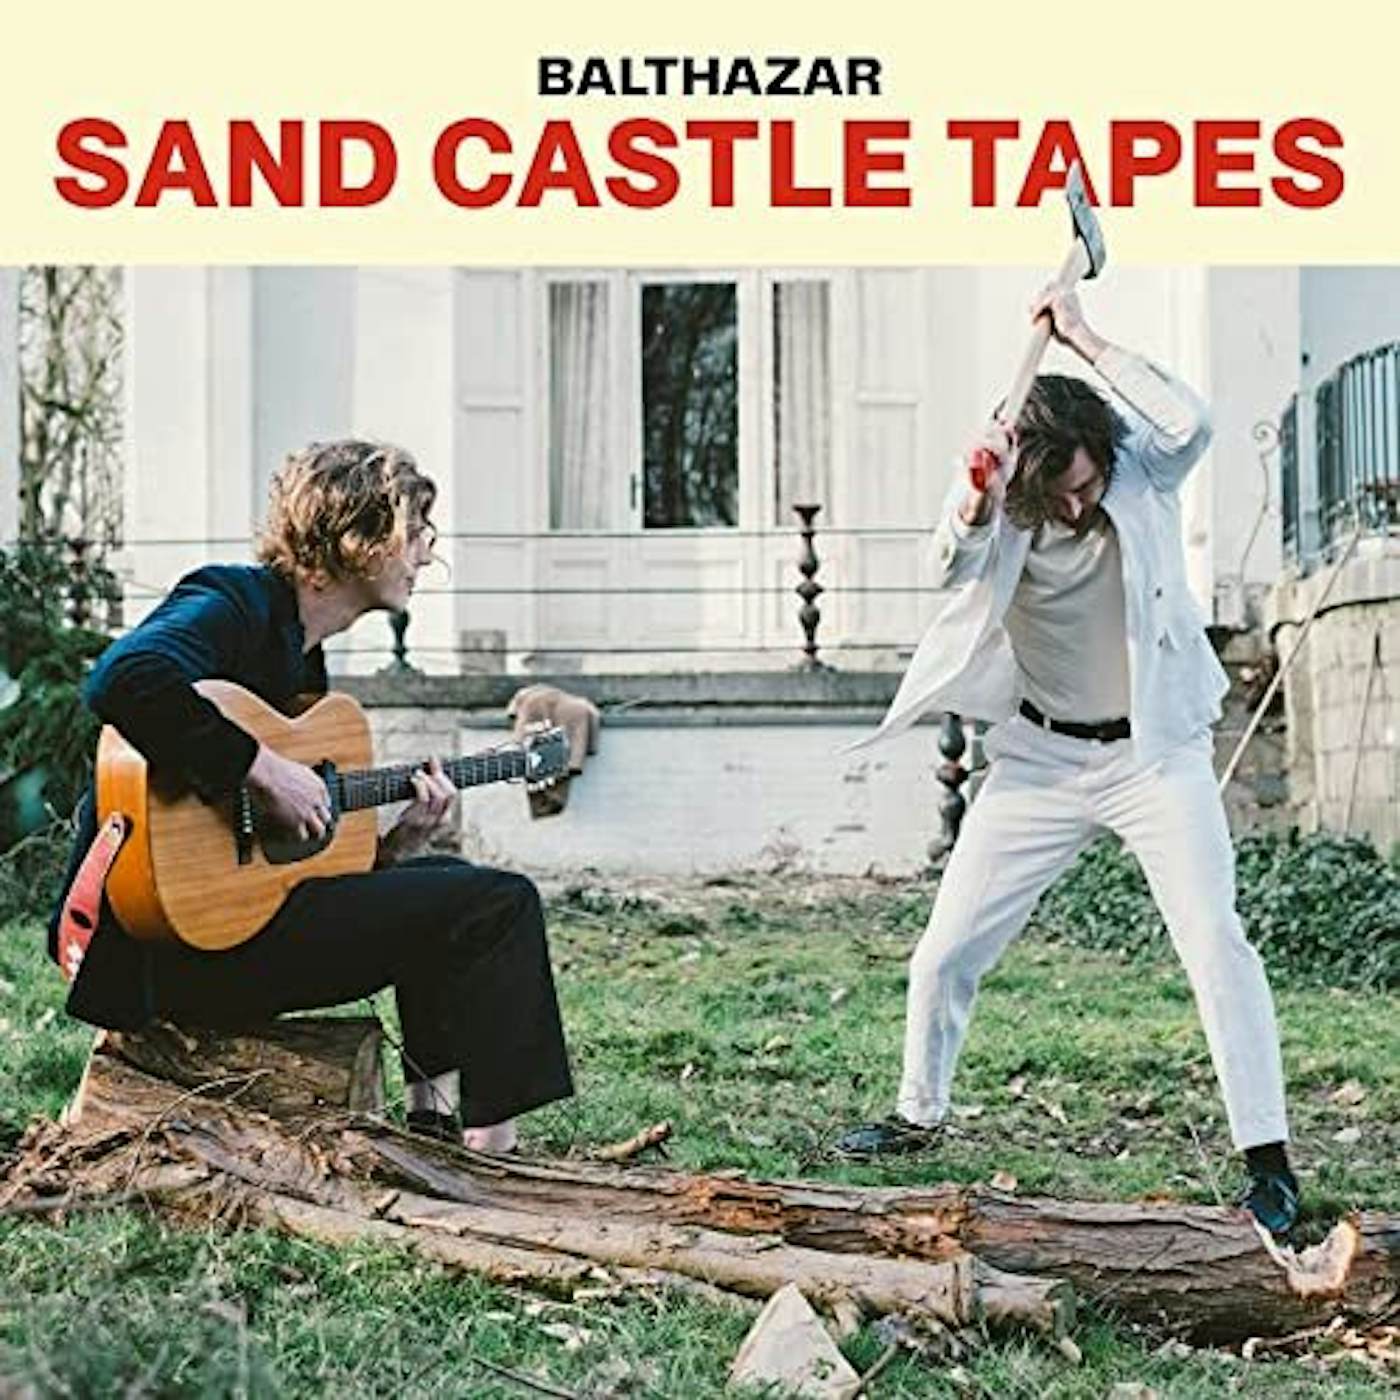 Balthazar Sand Castle Tapes Vinyl Record